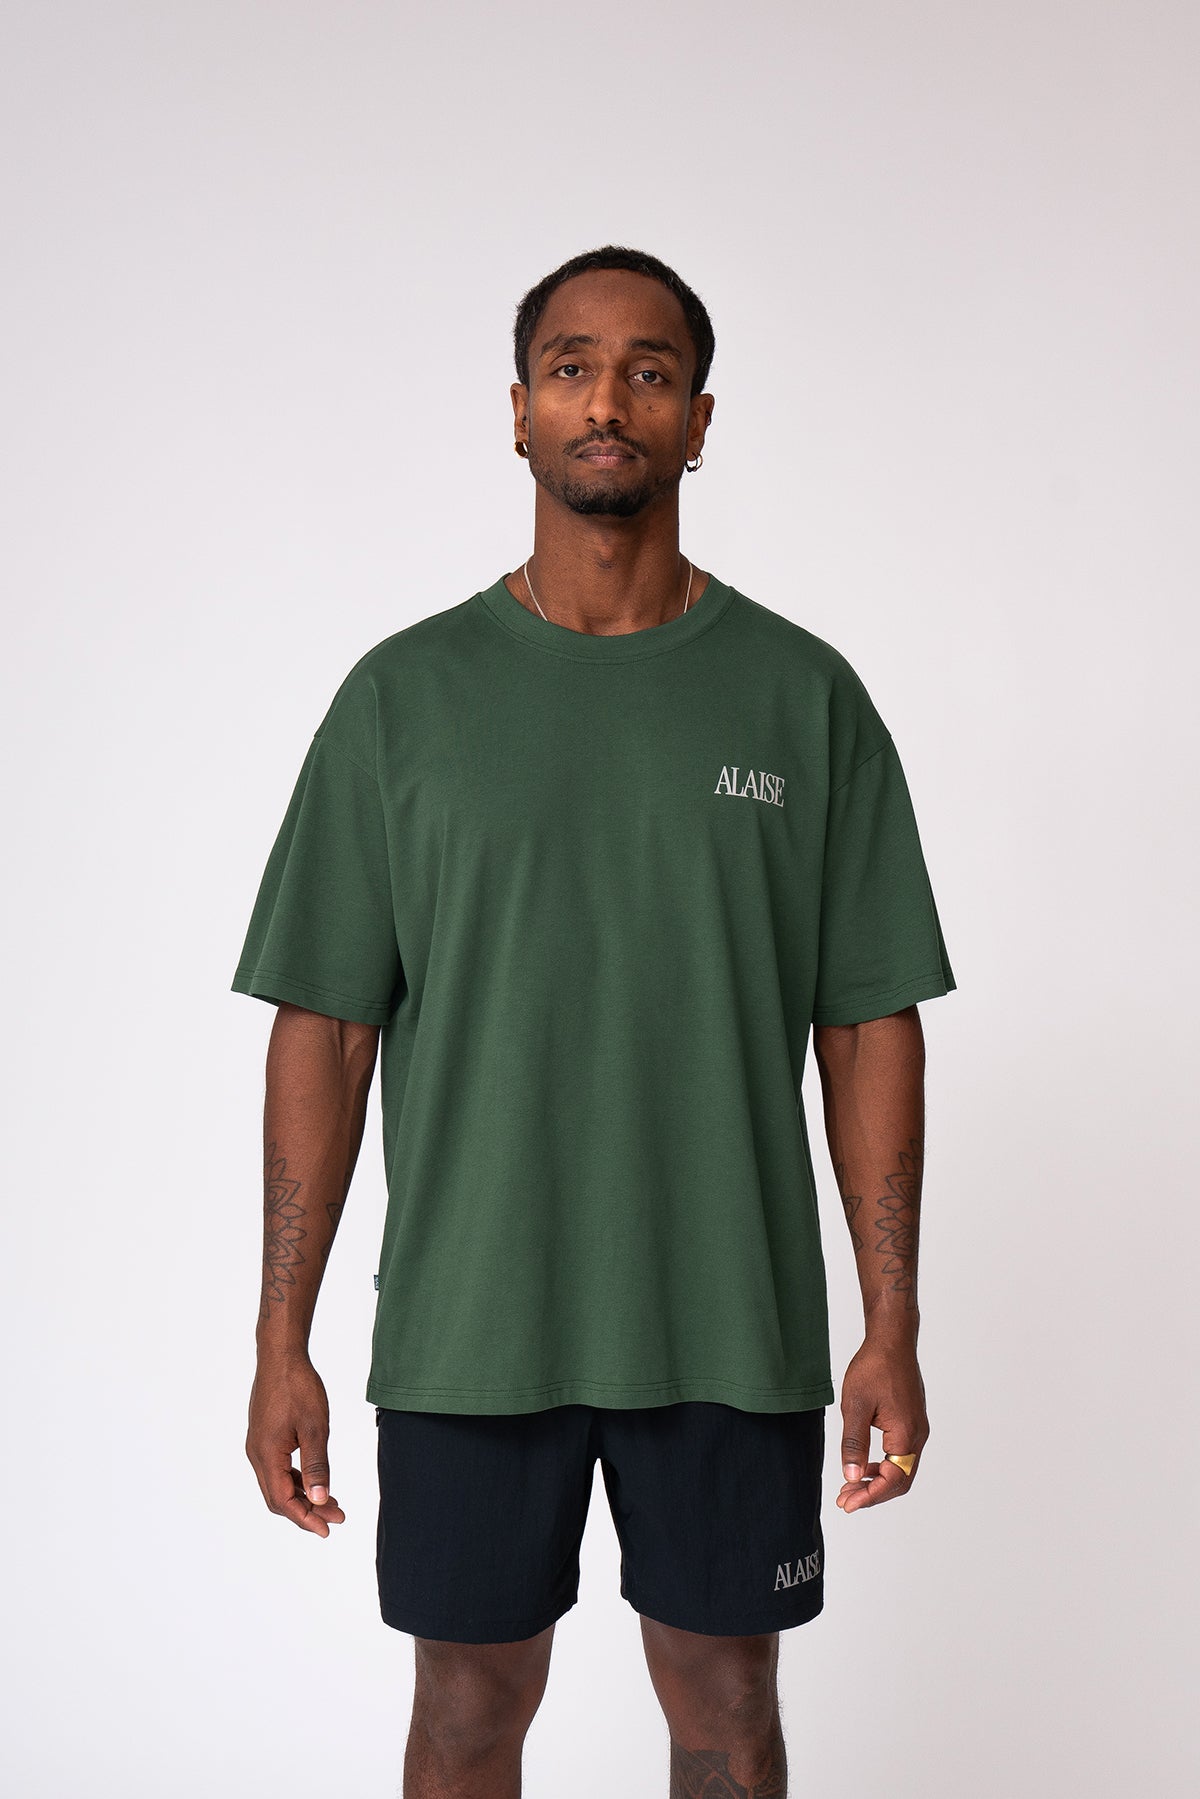 Alaise Box Fit T-Shirt - Green